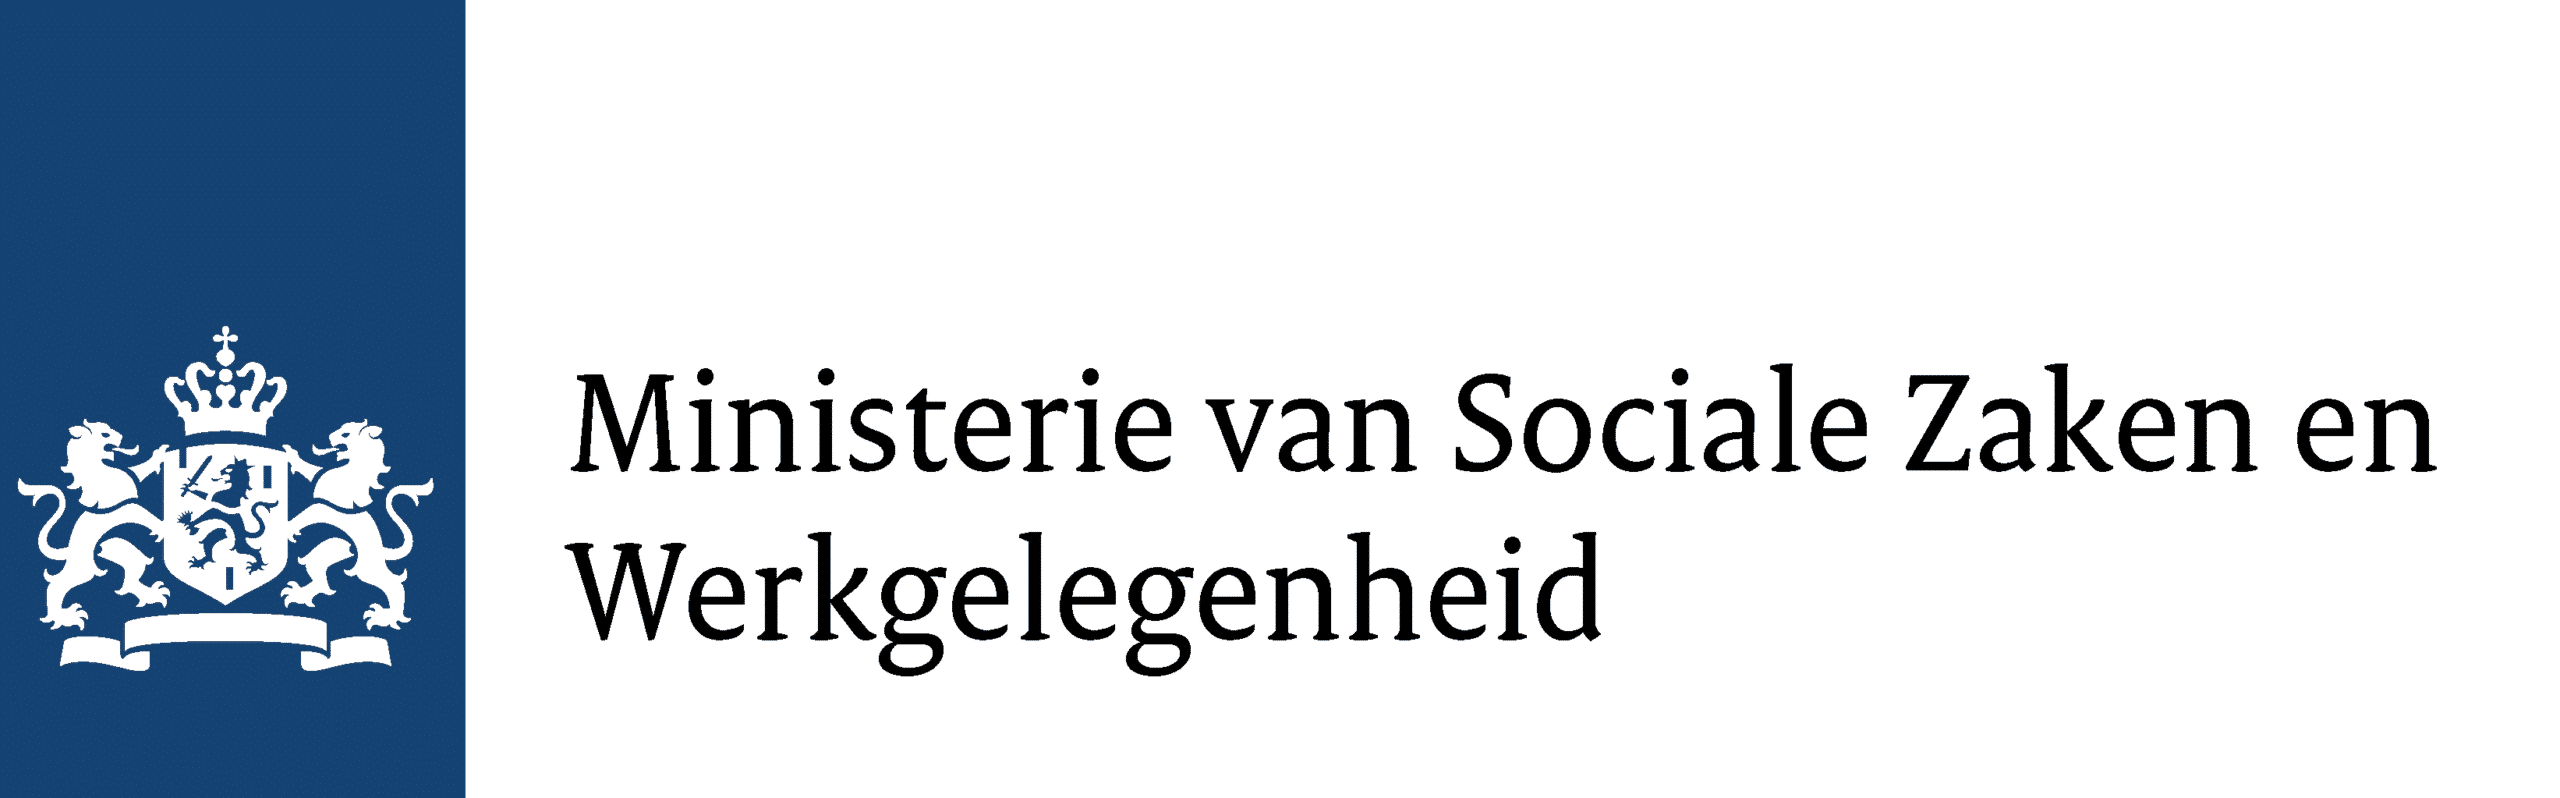 Ministerie Van Sociale Zaken En Werkgelegenheid Logo